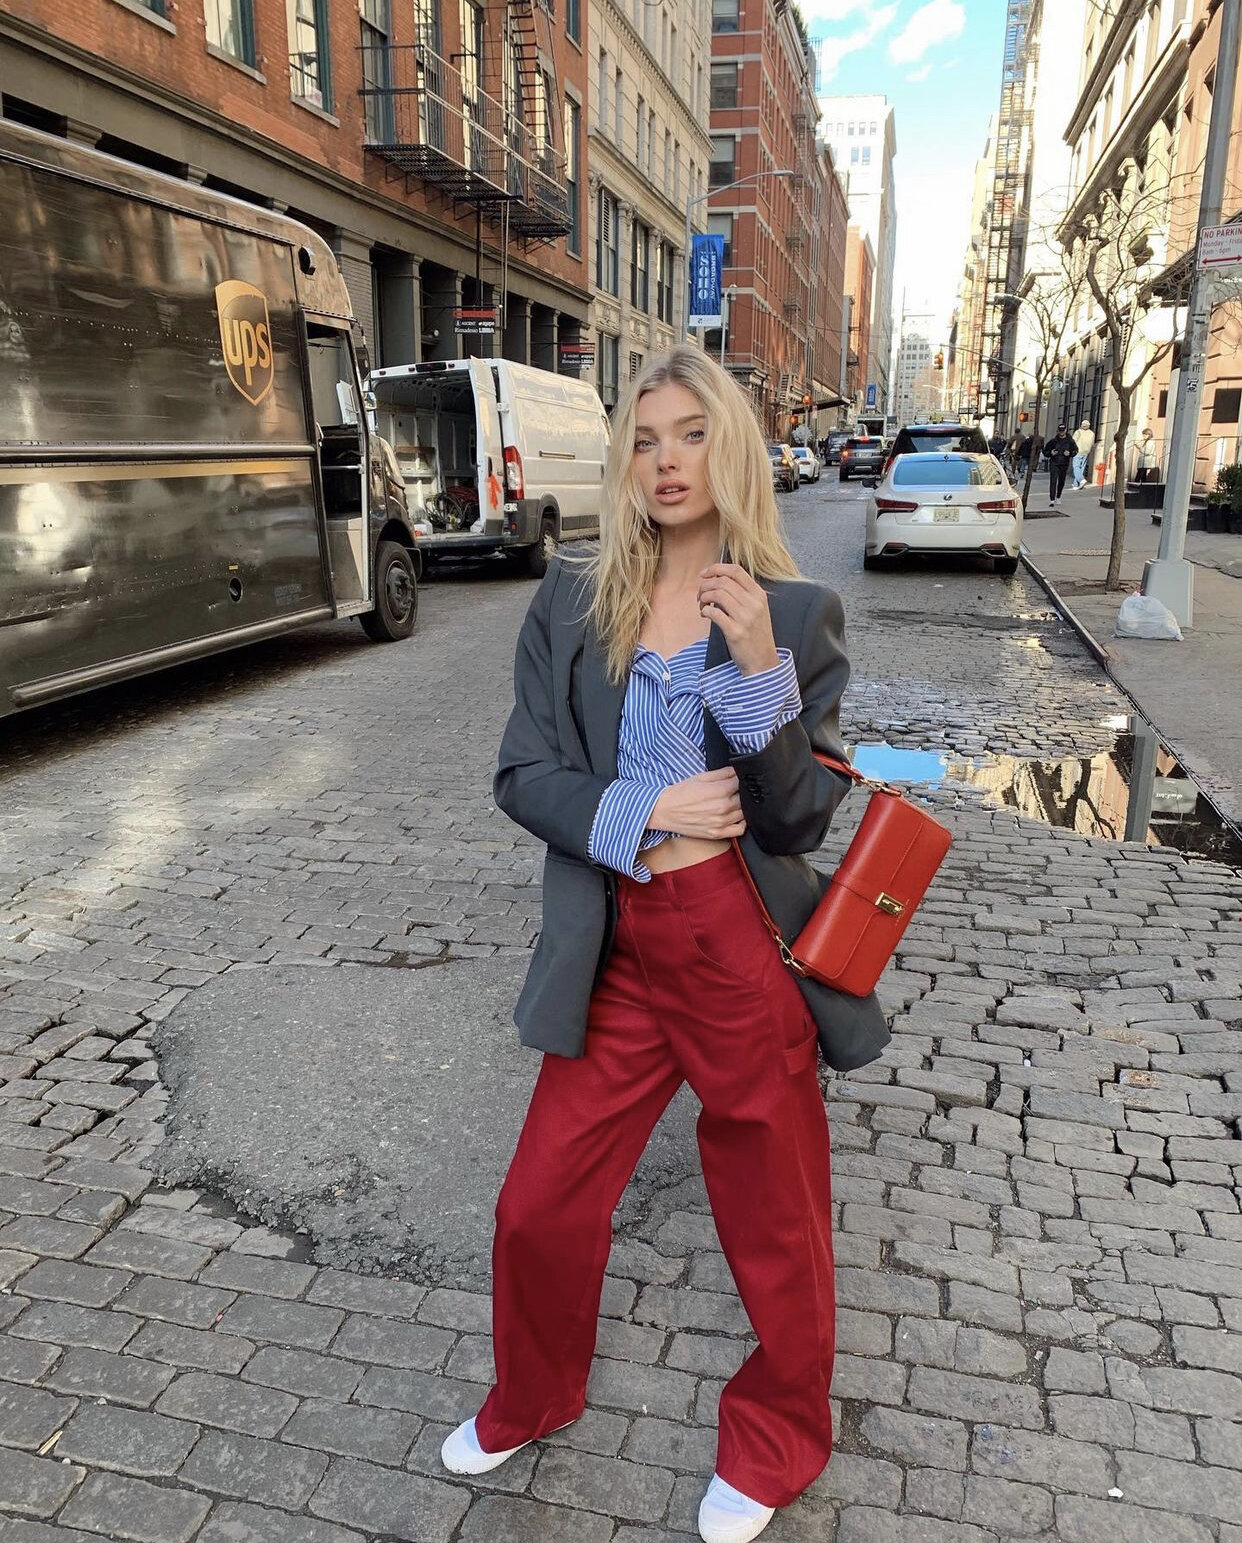 Elsa Hosk's Green Blouse and Gucci Belt Bag Look for Less